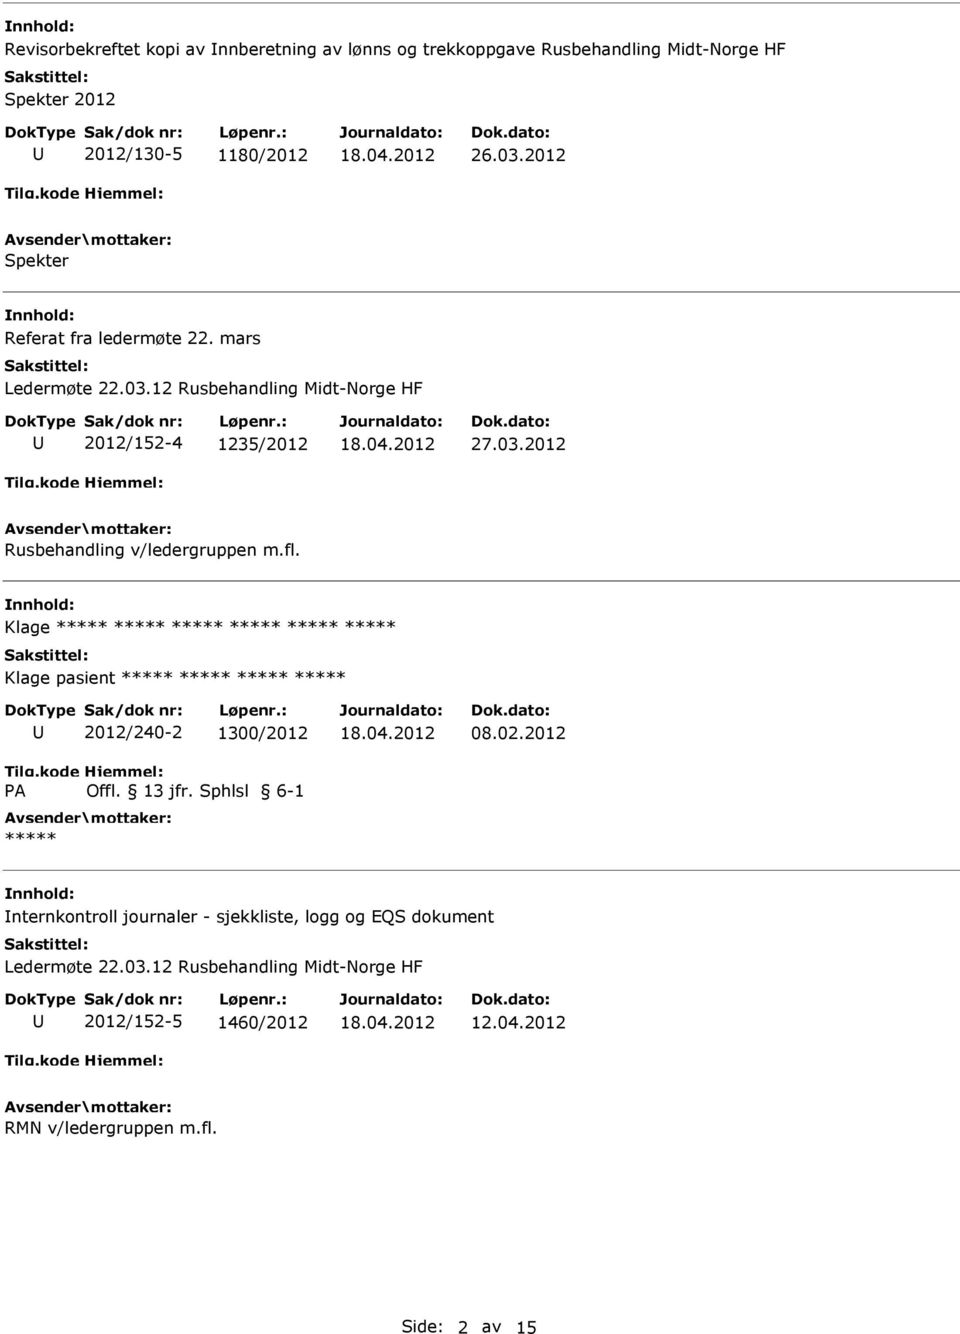 fl. Klage Klage pasient PA 2012/240-2 1300/2012 Offl. 13 jfr. Sphlsl 6-1 08.02.